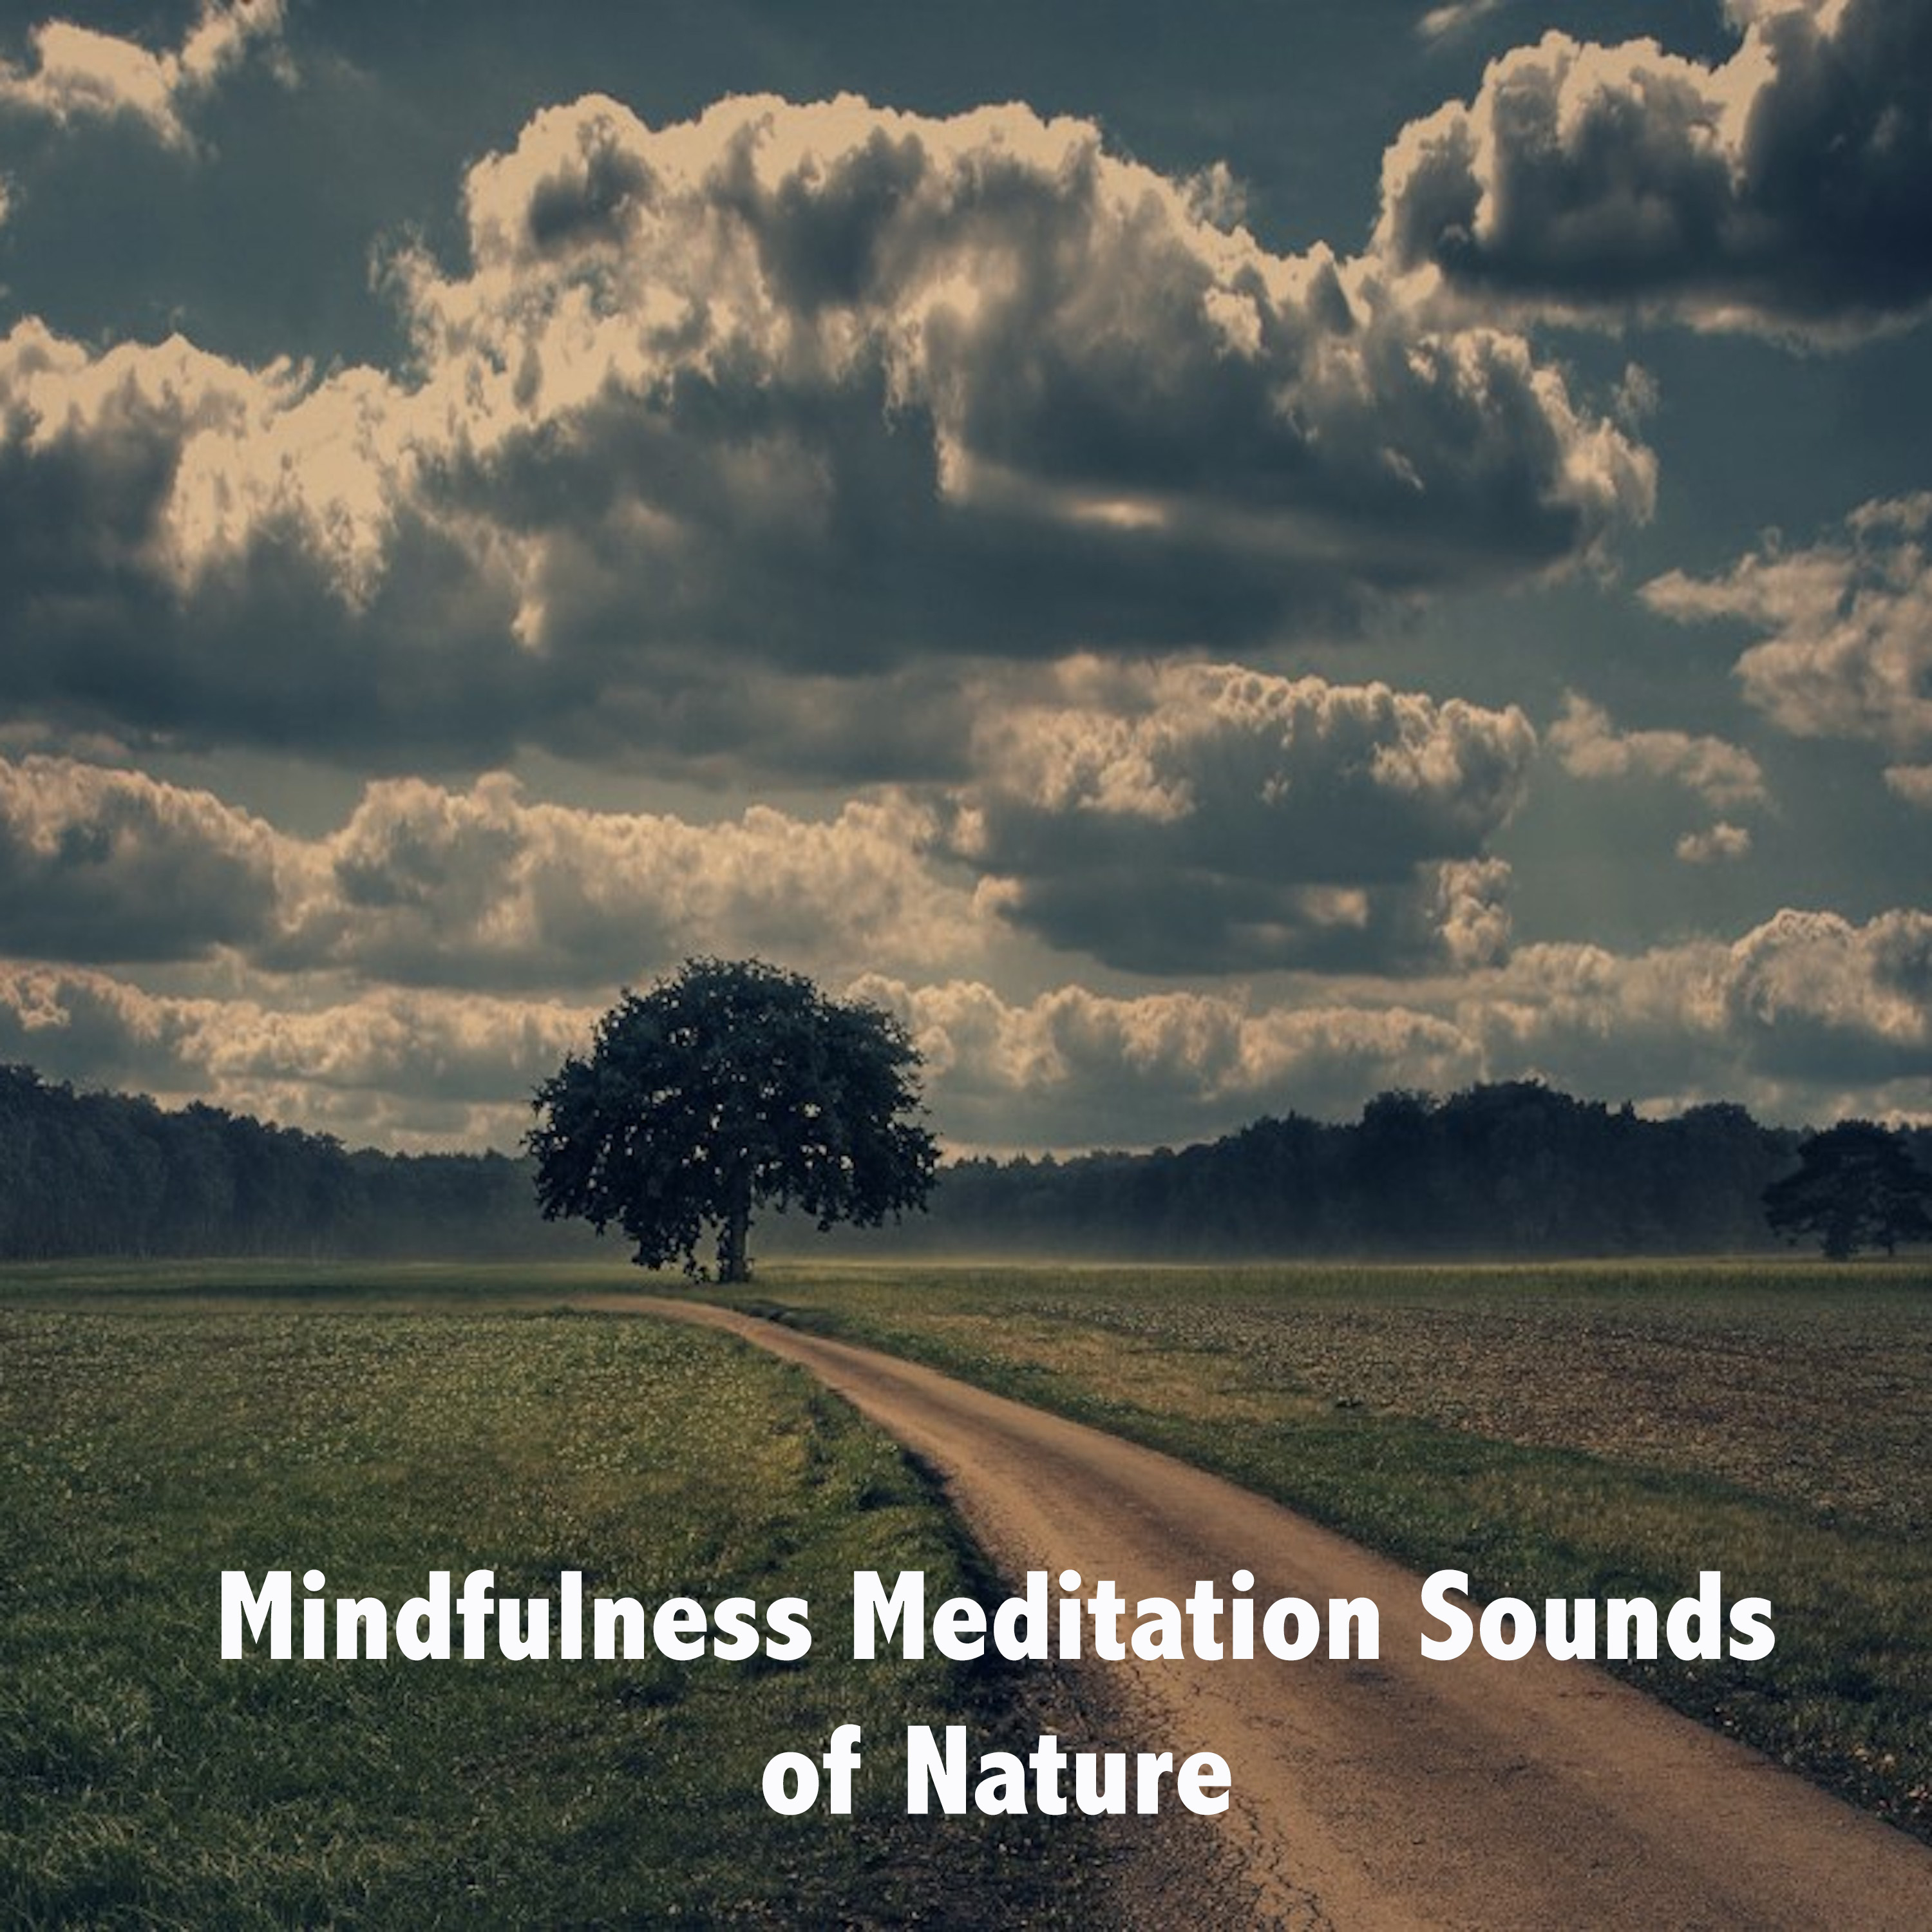 Ambient Mindfulness Meditation Sounds of Nature